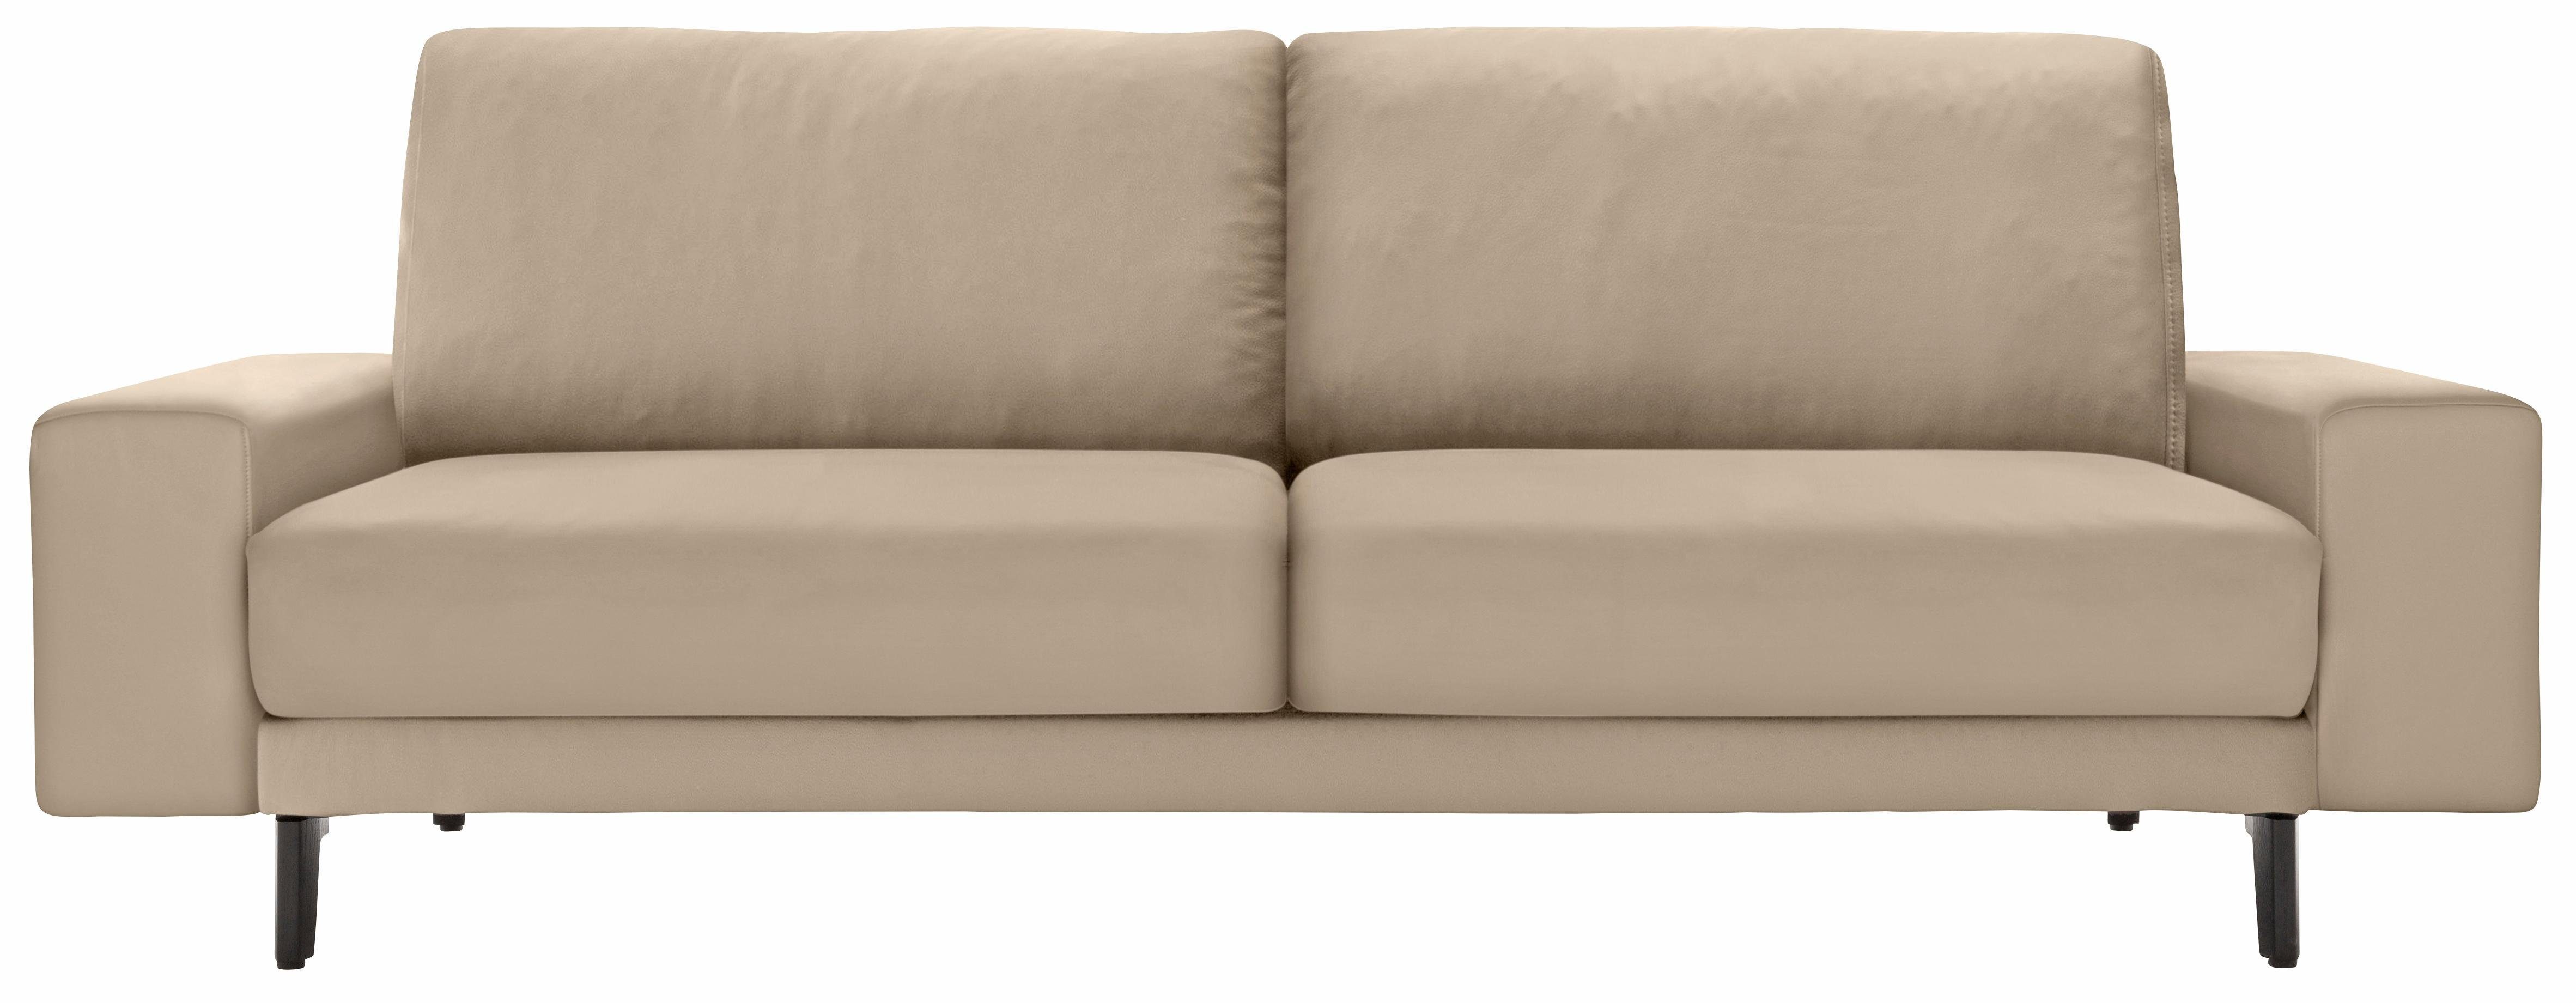 breit cm niedrig, 2-Sitzer 180 hs.450, Armlehne in hülsta umbragrau, Alugussfüße sofa Breite